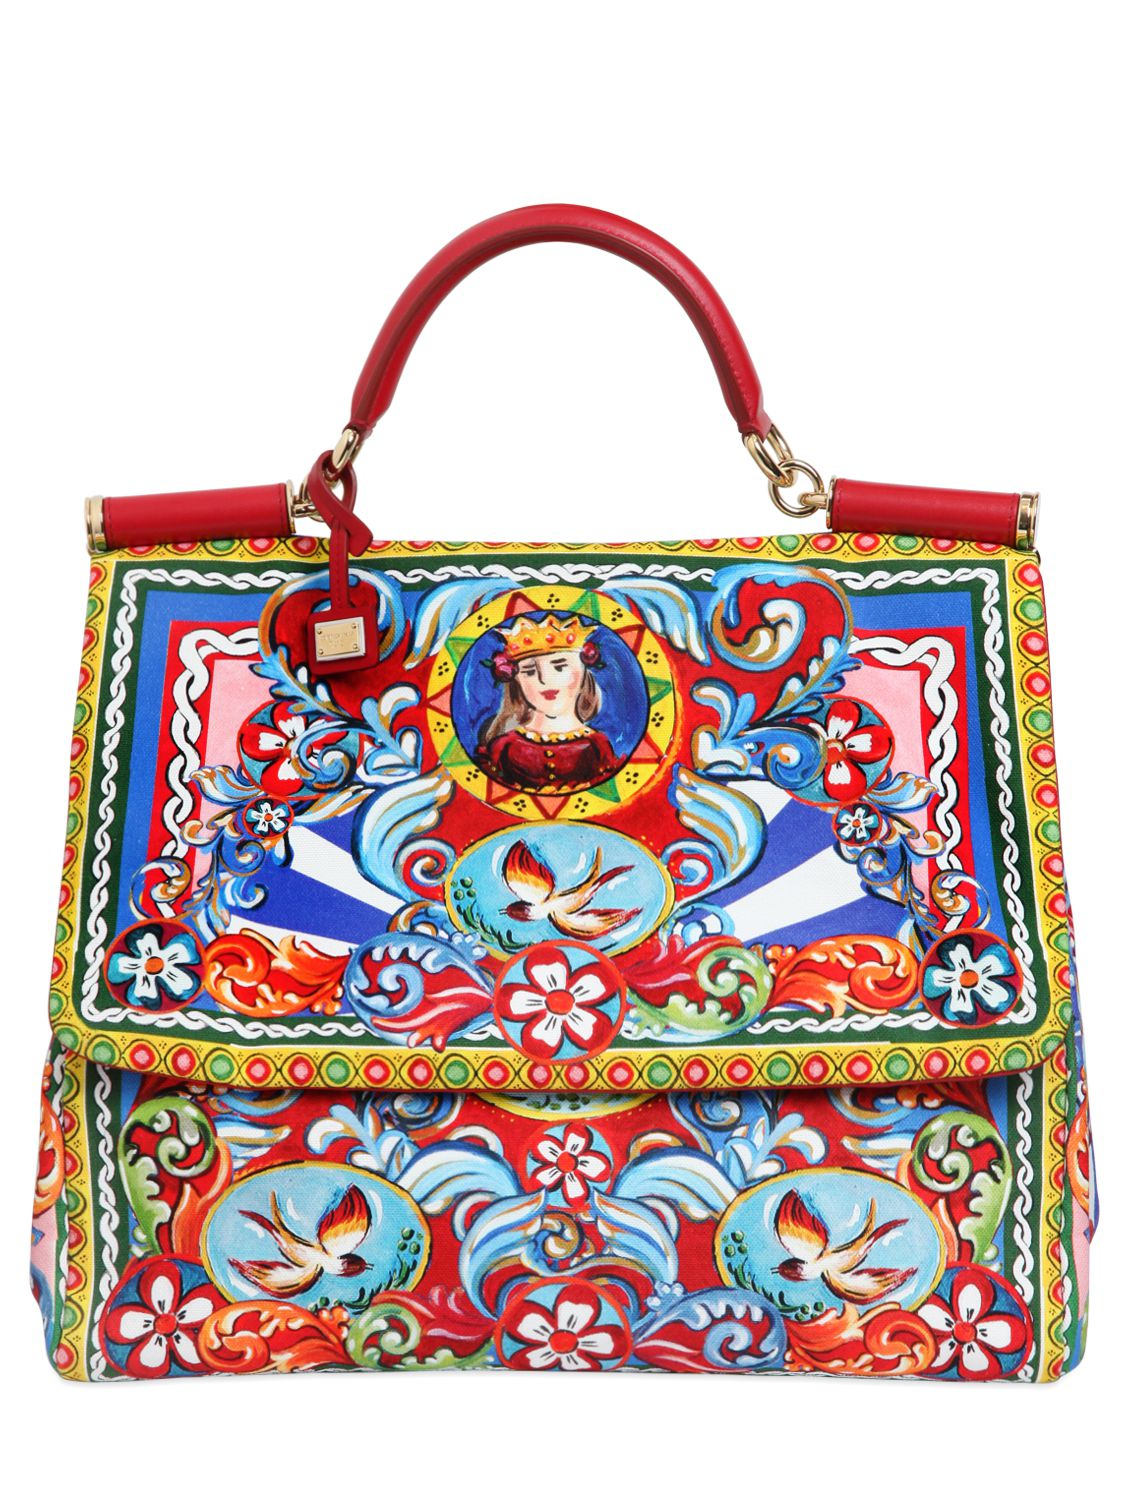 Lyst - Dolce & Gabbana Maxi Sicily Printed Cotton Canvas Bag